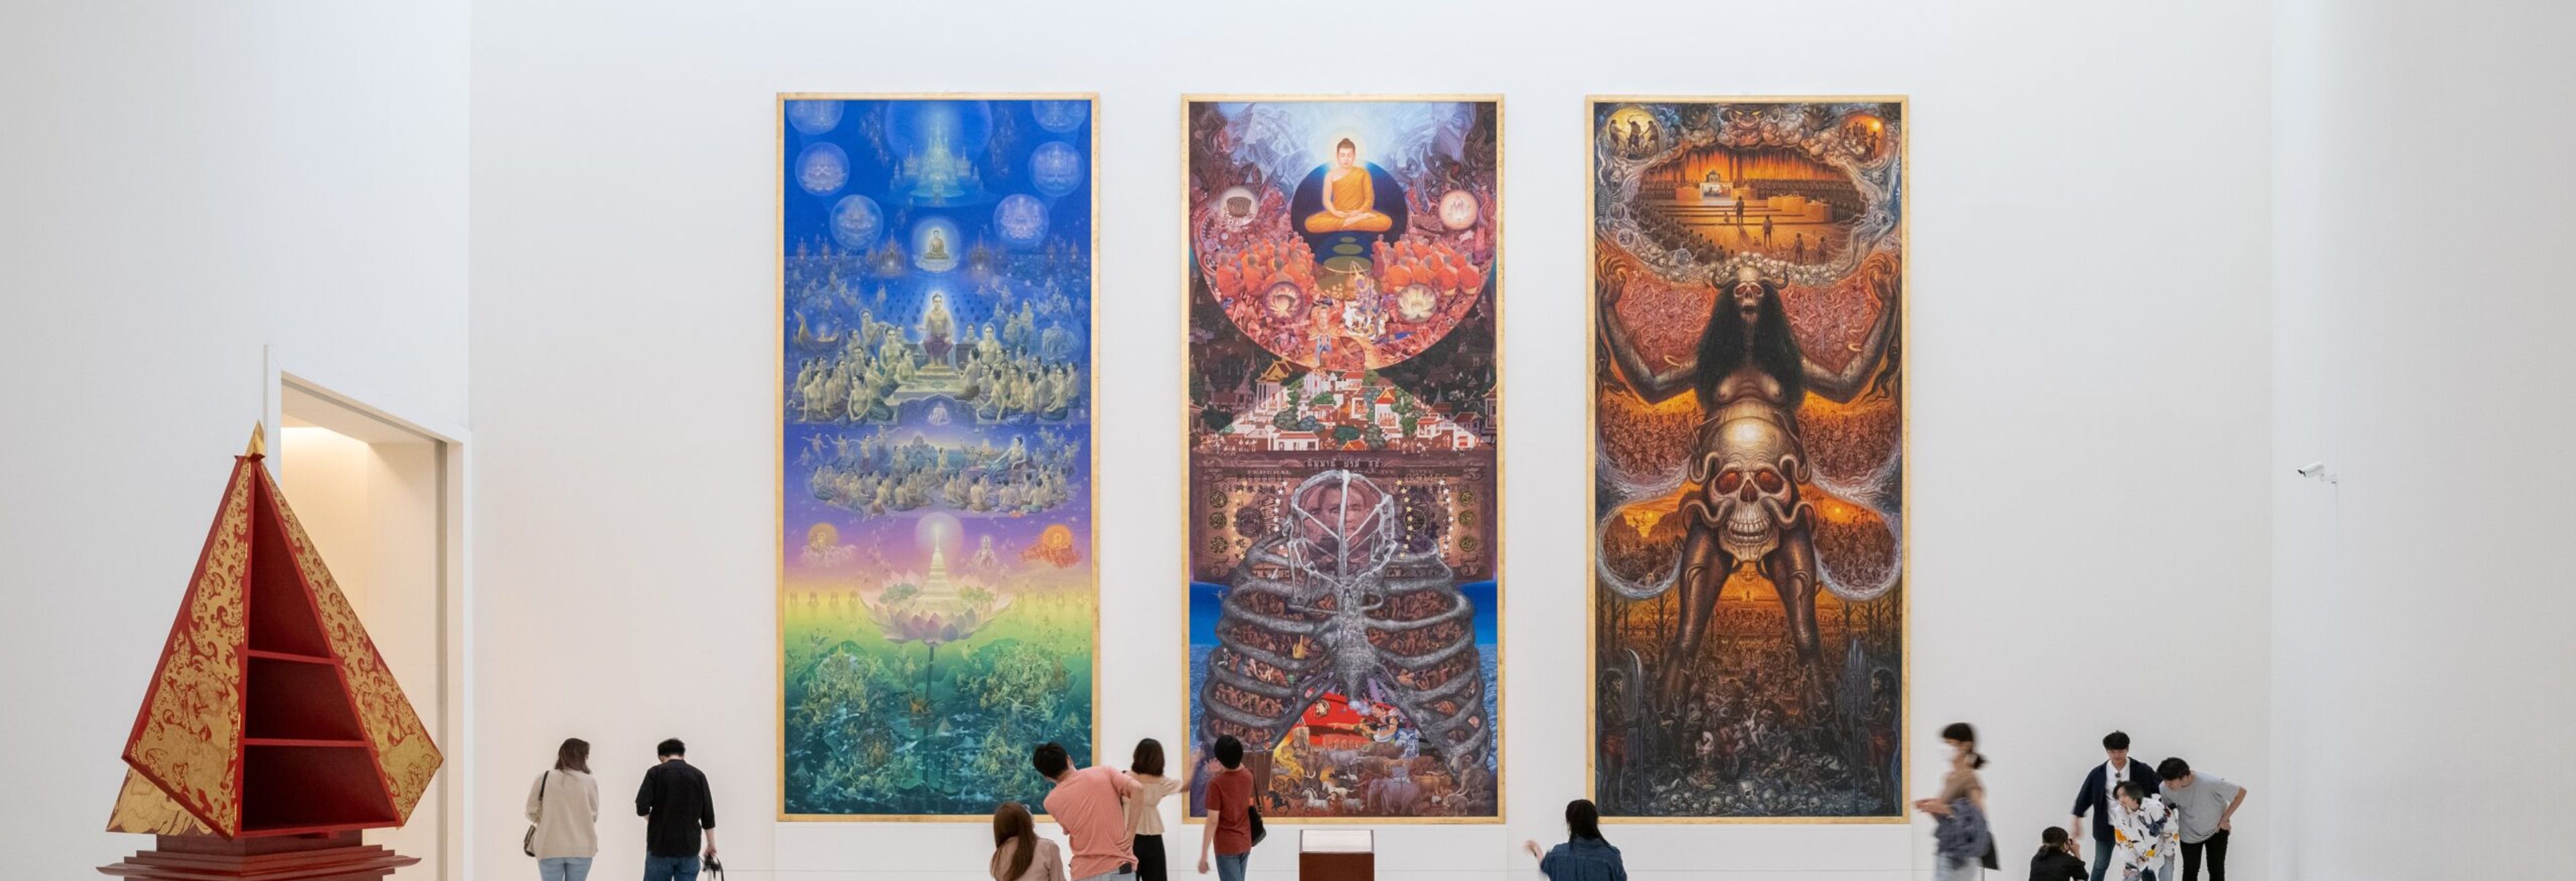 museum of contemporary art thailand